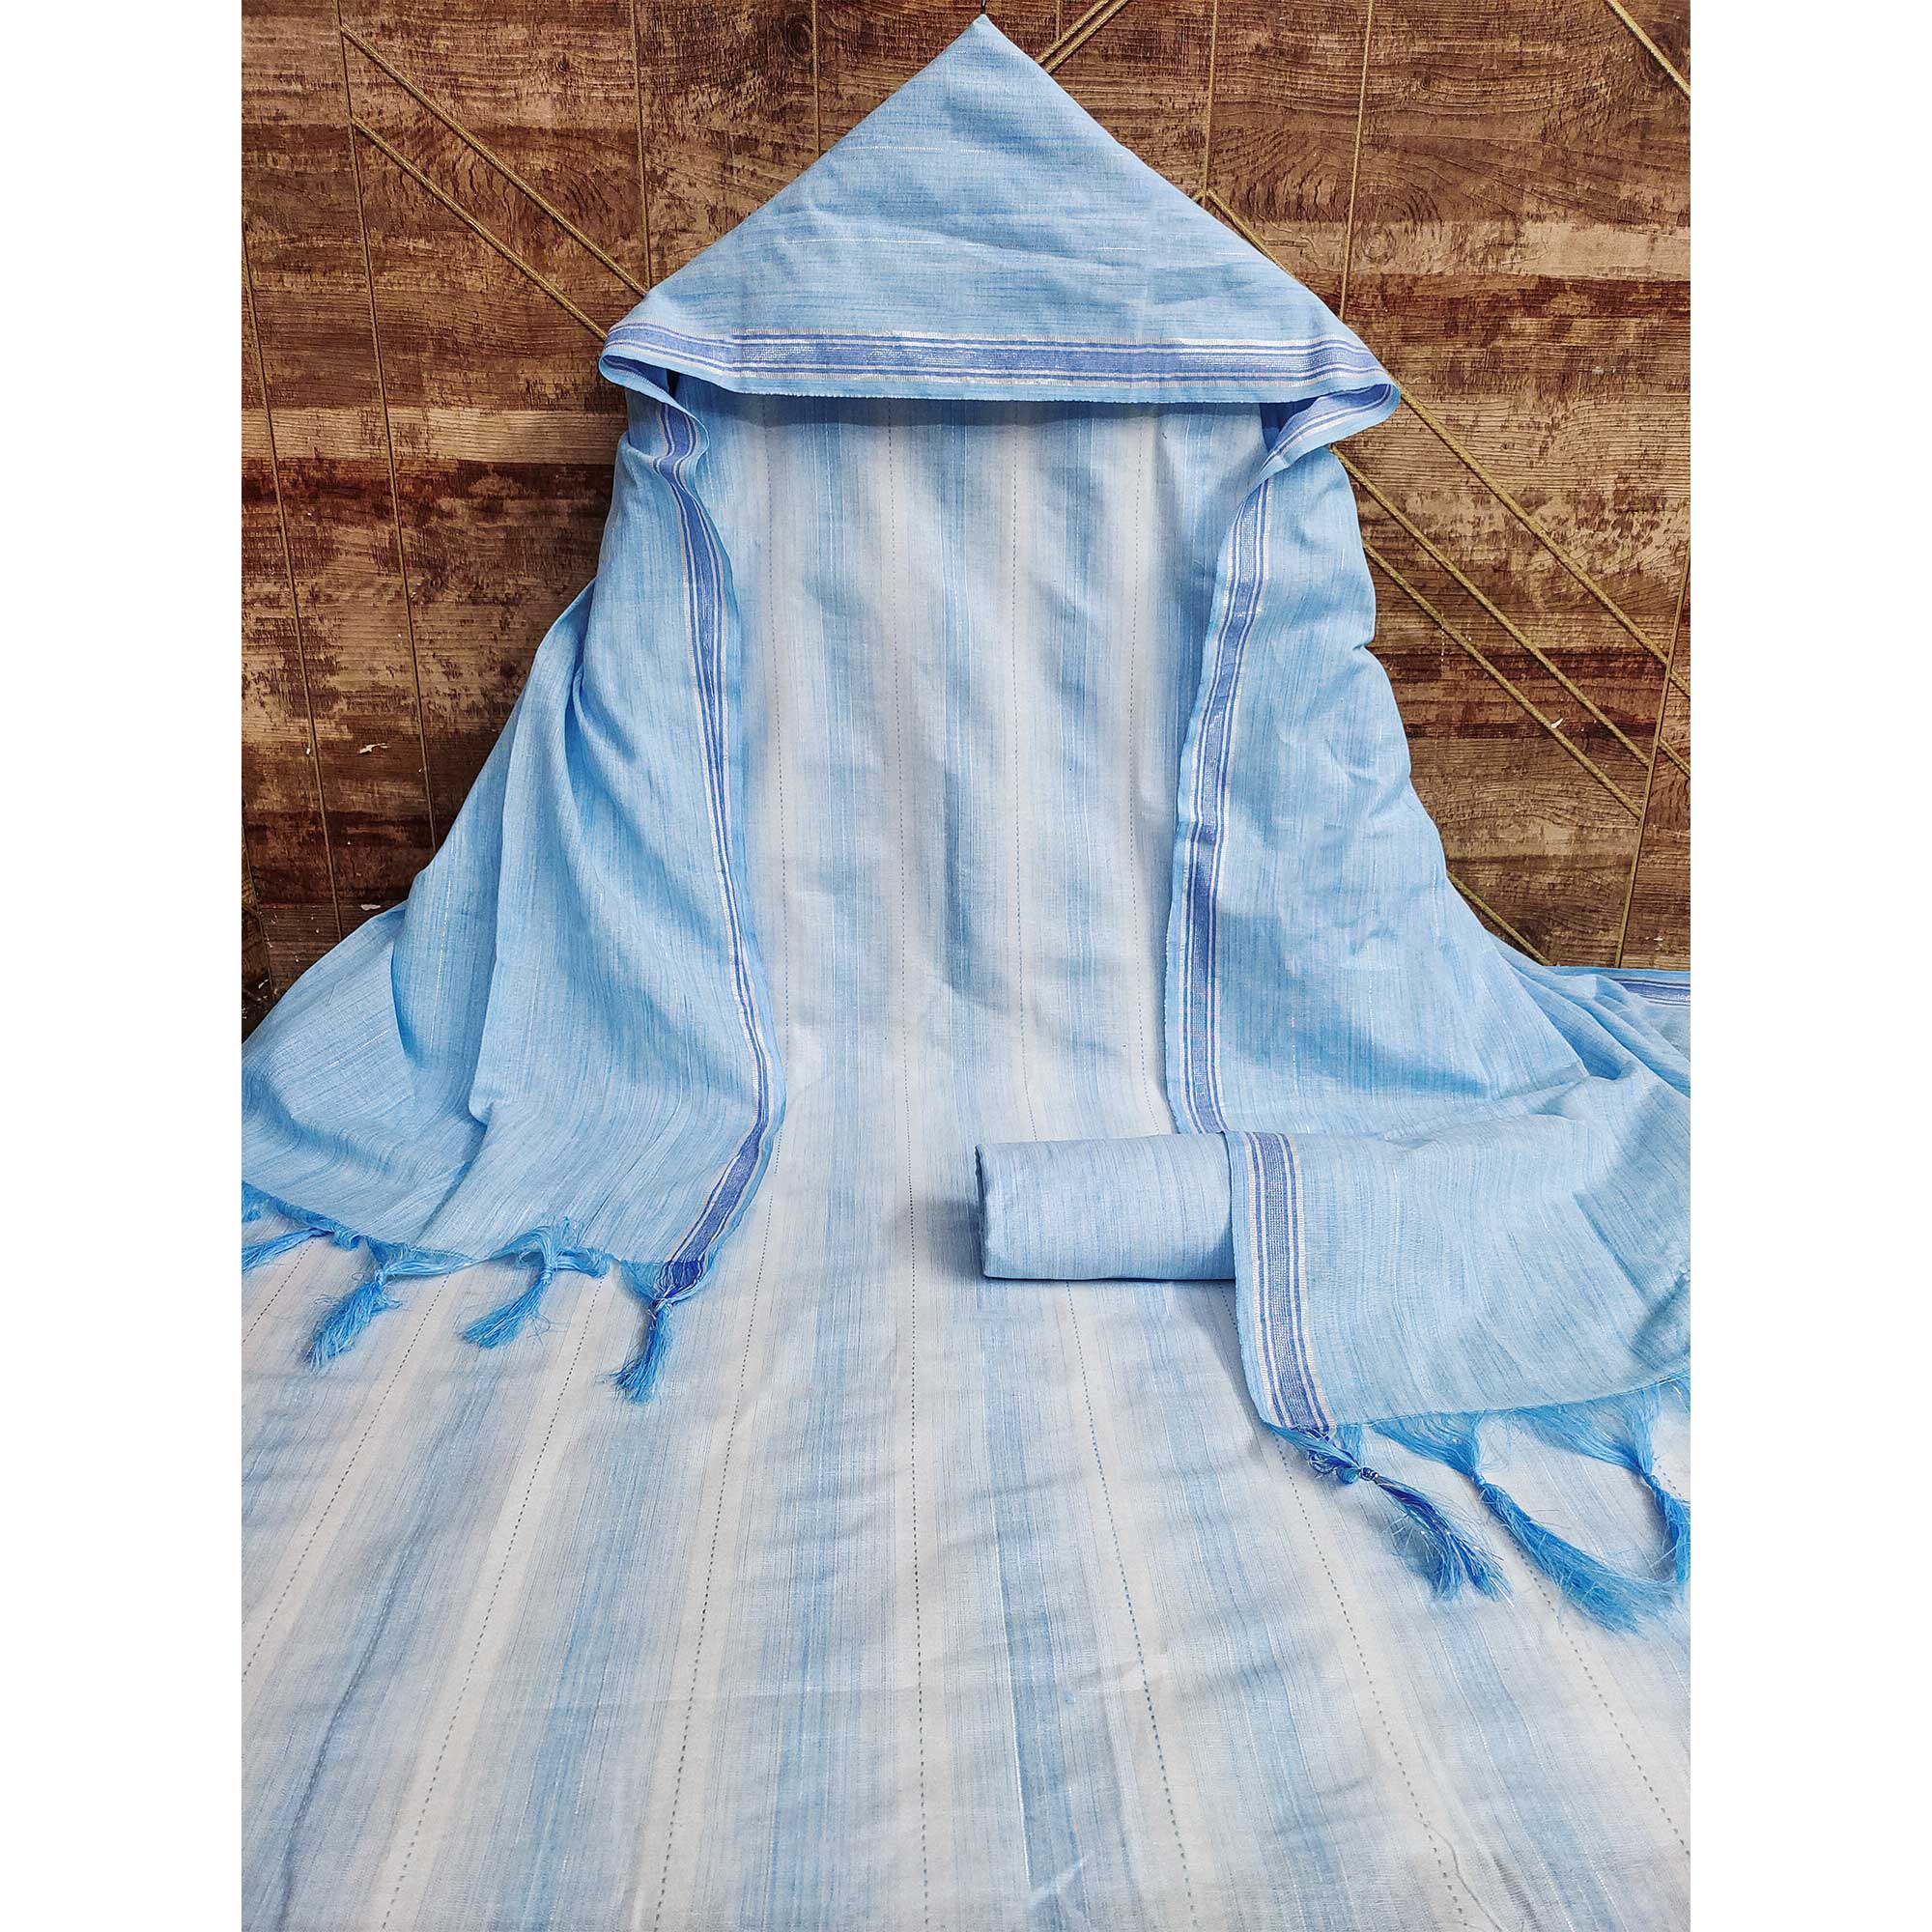 Blue Woven Cotton Dress Material